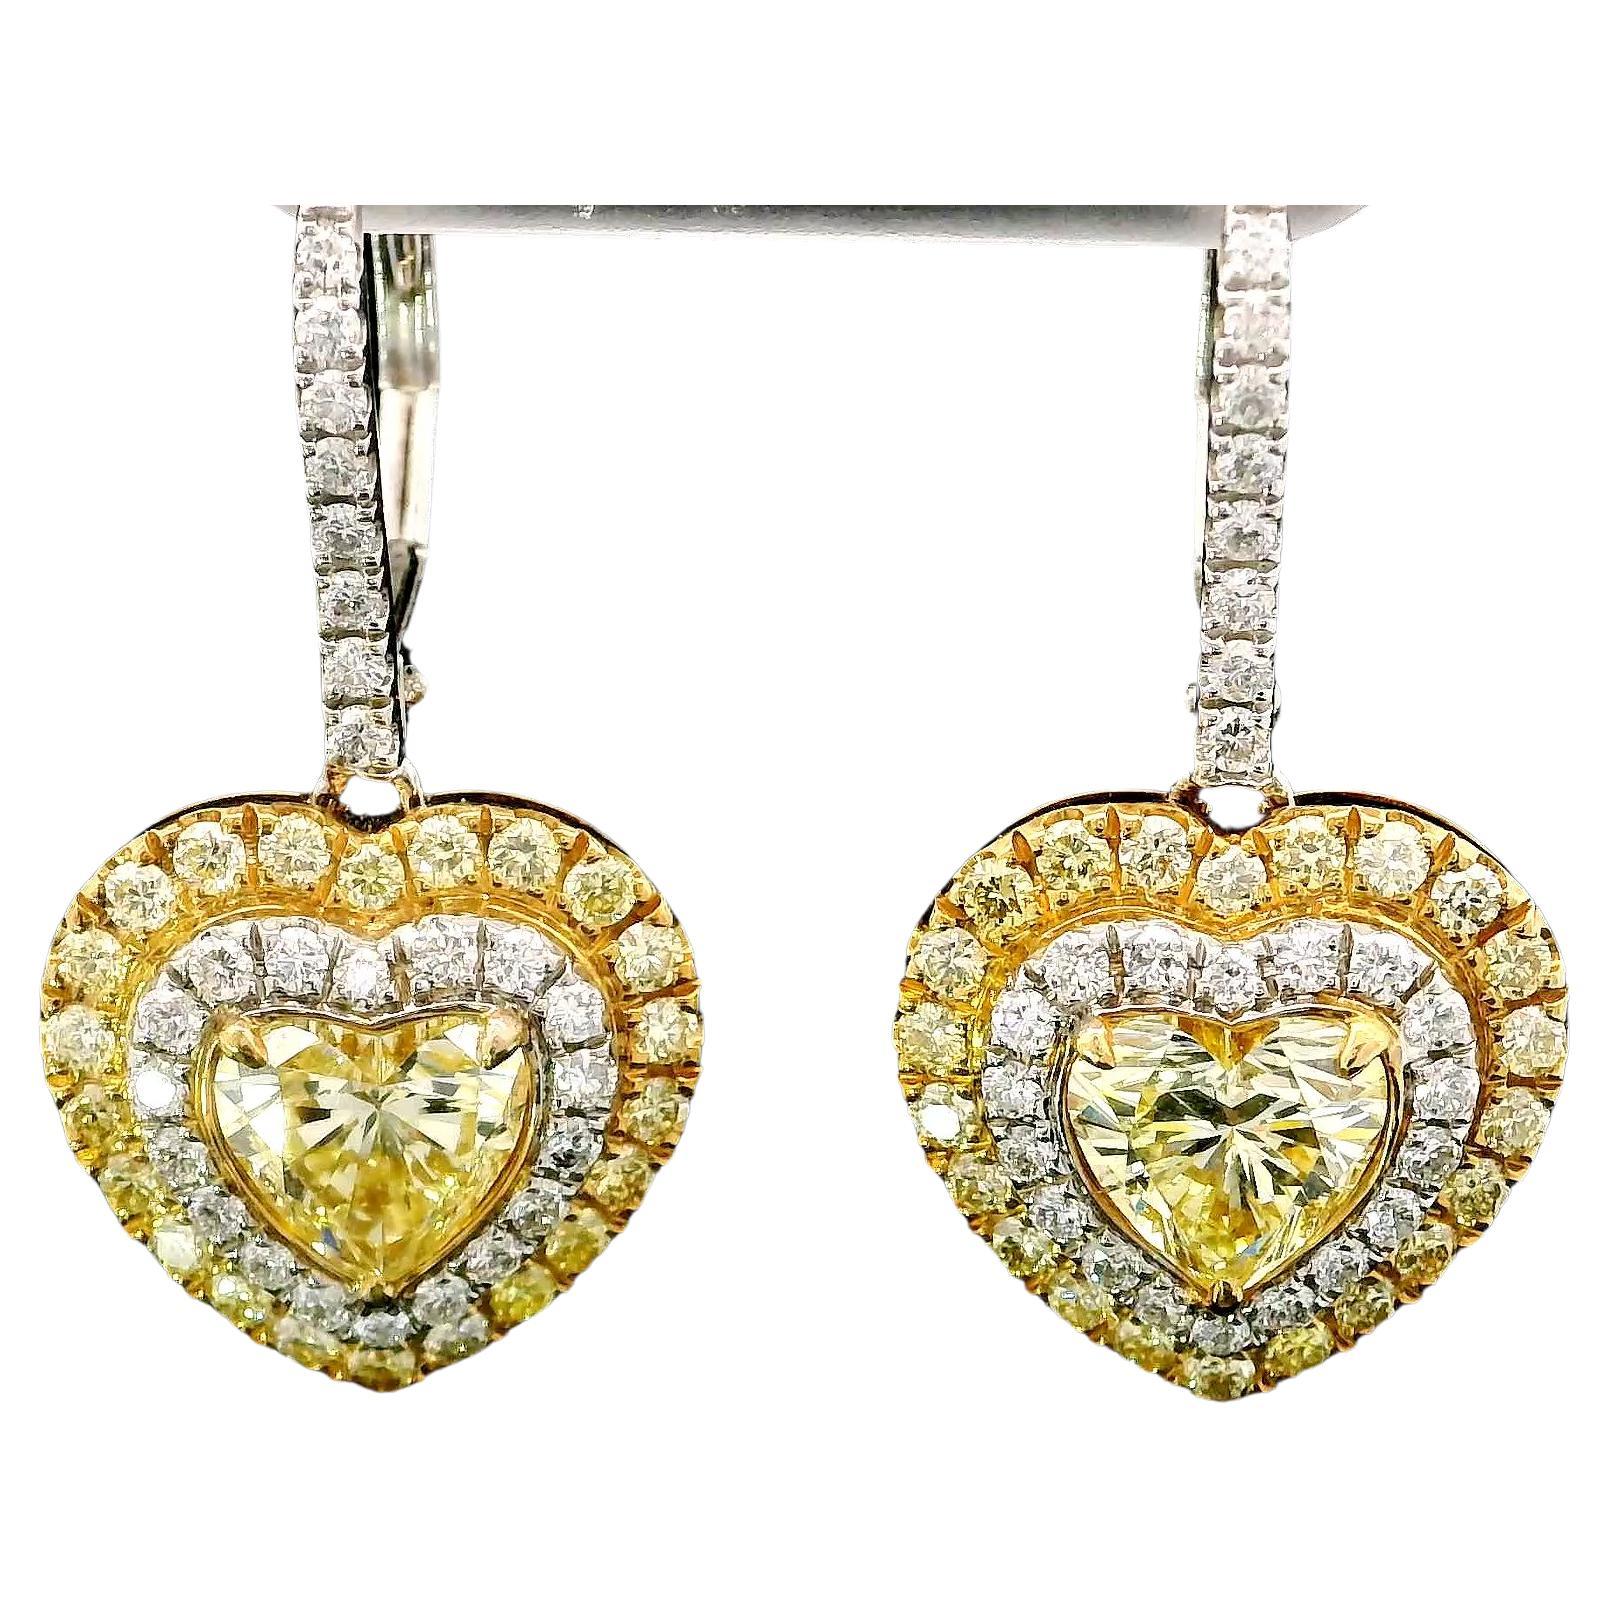 1.66 Carat Fancy Yellow Diamond Earrings GIA Certified